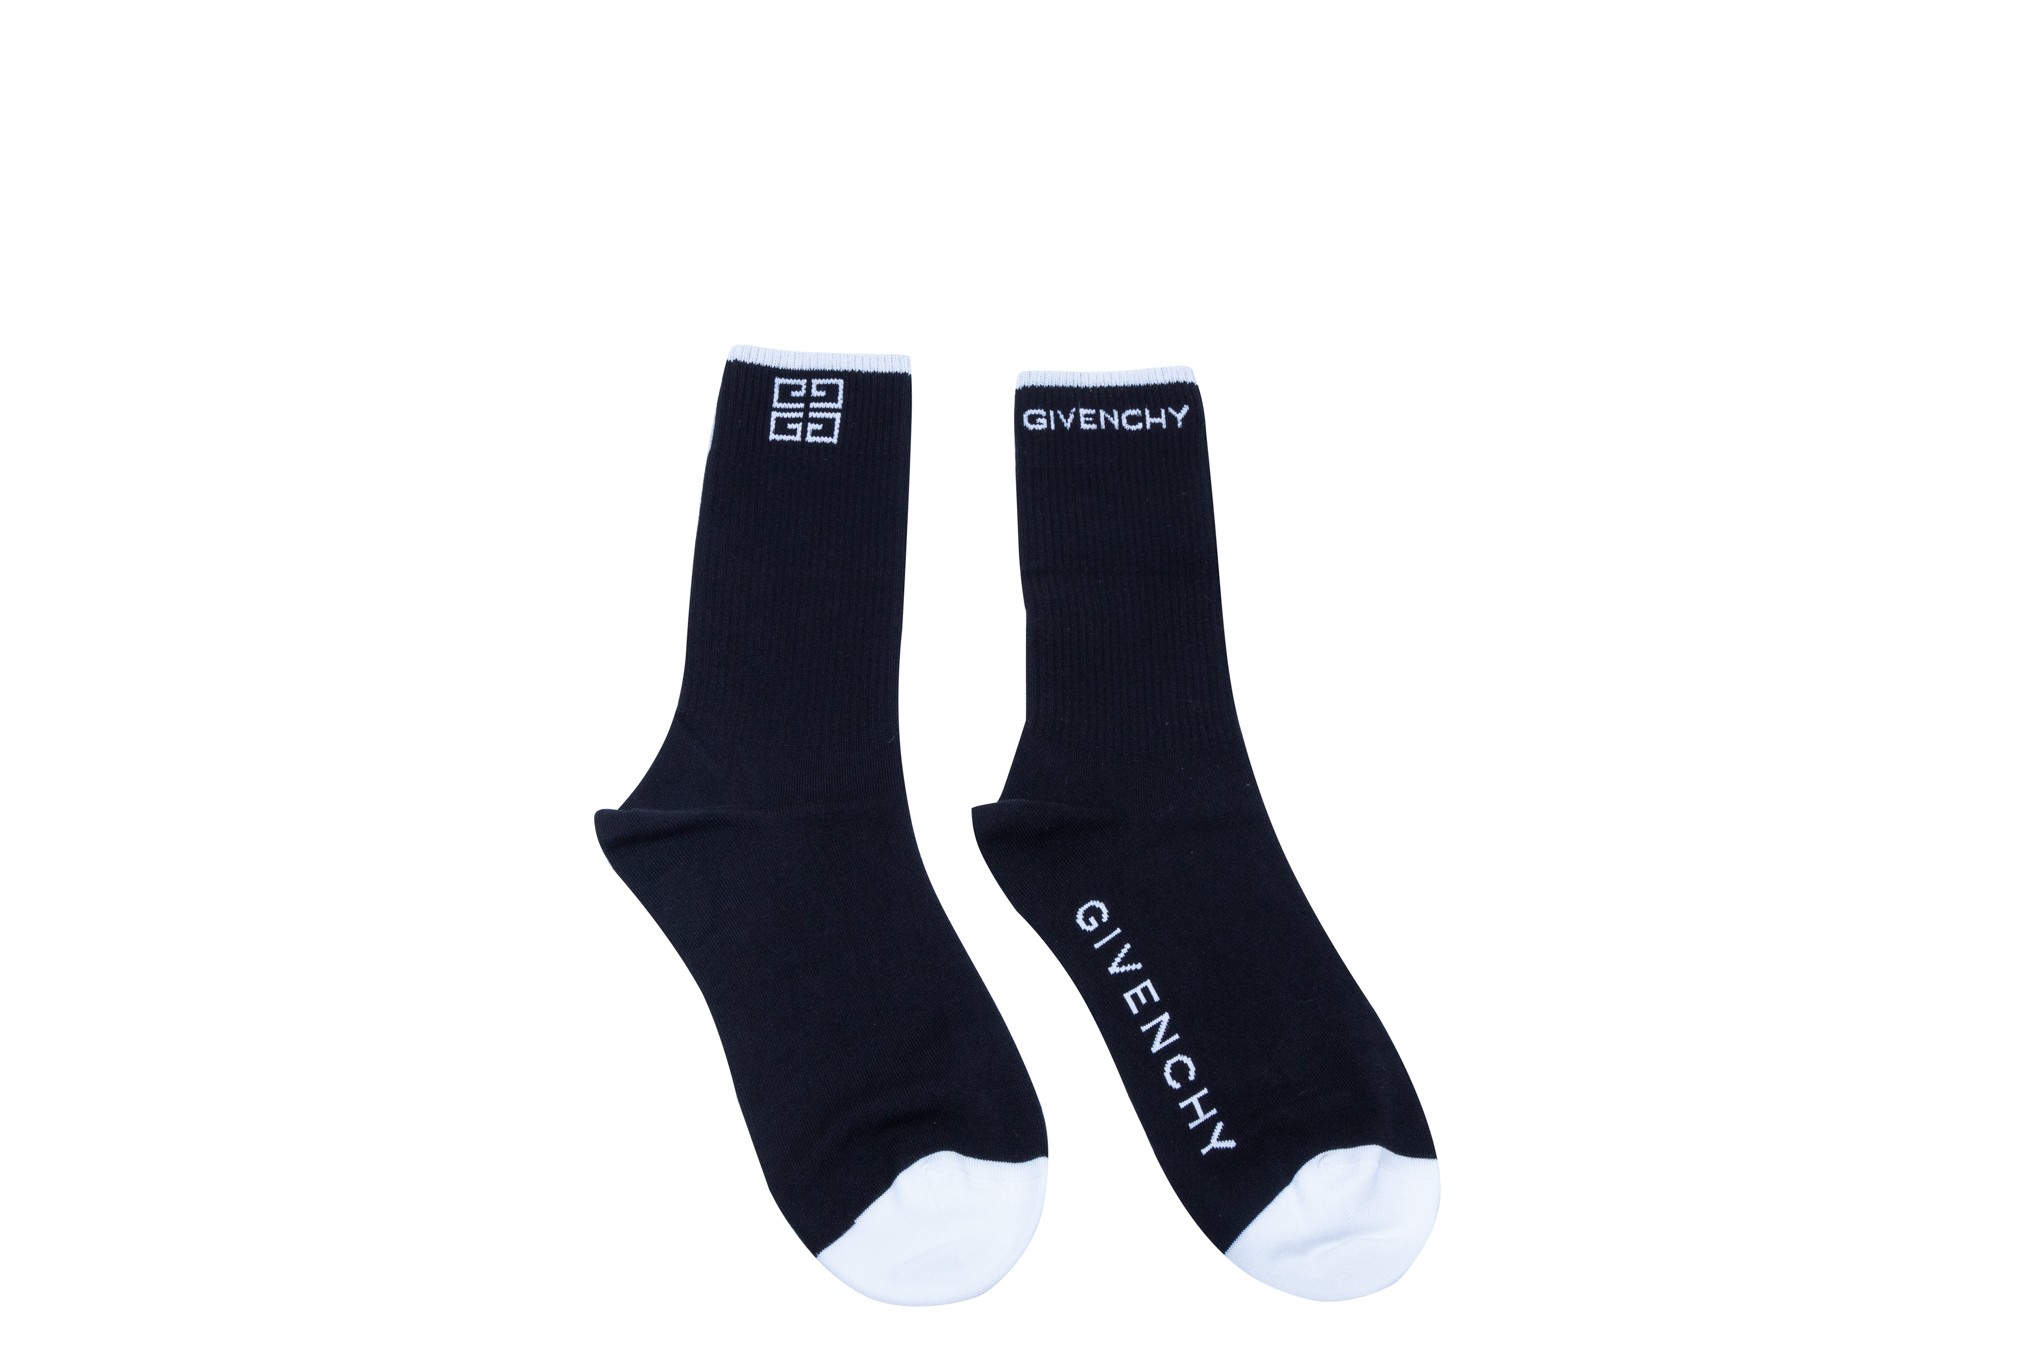 https://www.studio14.com/27478/givenchy-knitwear-socks-cotton-with-elastic.jpg